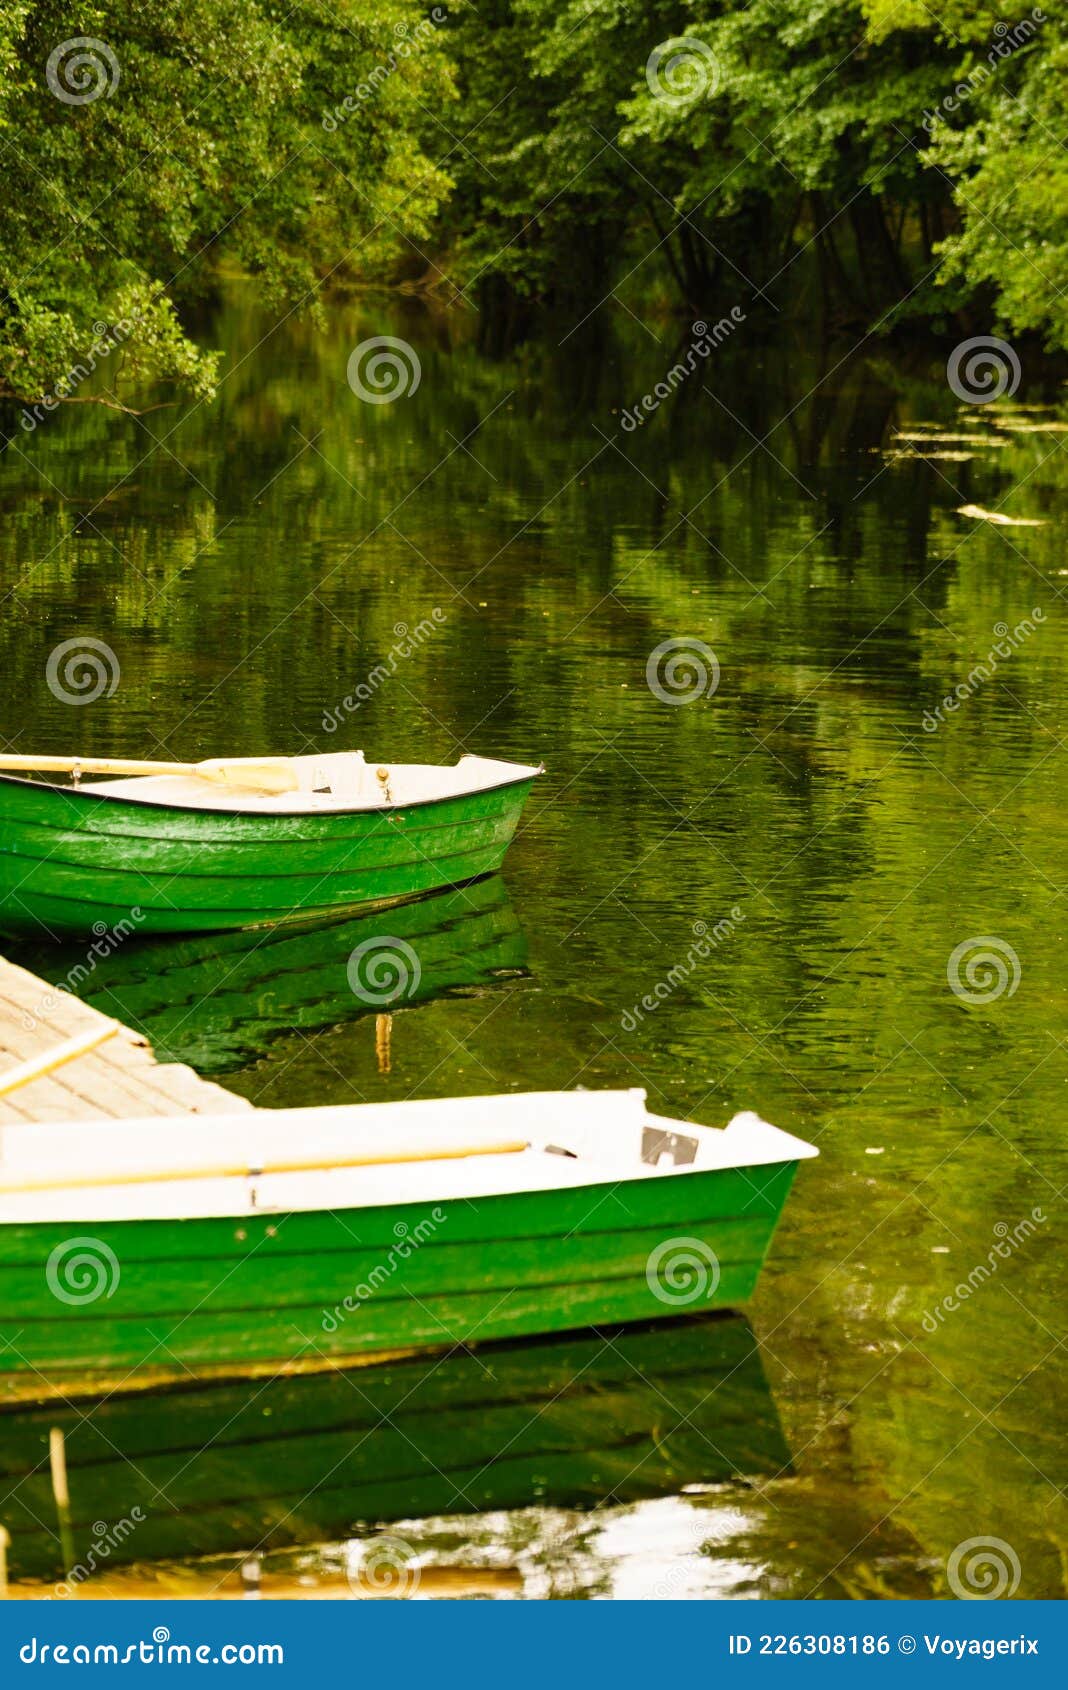 https://thumbs.dreamstime.com/z/boat-lake-shore-fishing-boats-summer-activity-226308186.jpg